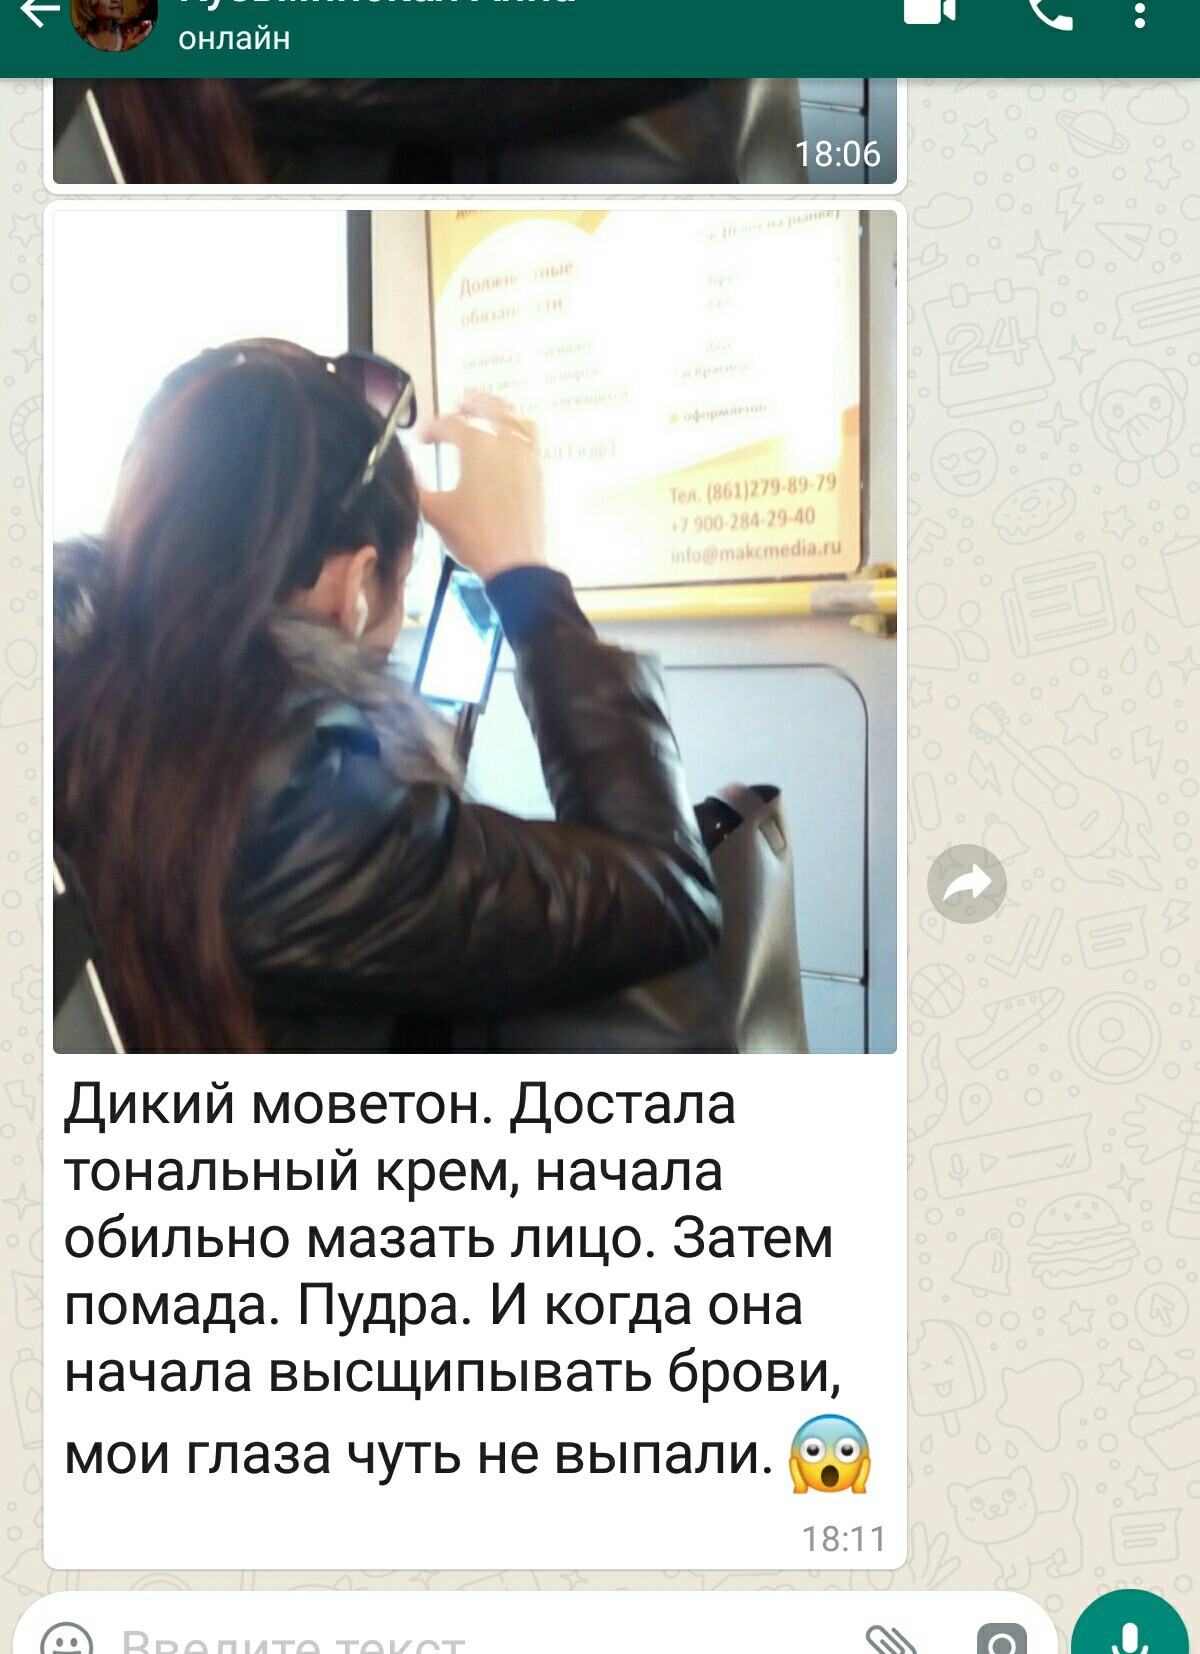 The wife sent. - Krasnodar, Public transport, Makeup, No make up, On the run, Longpost